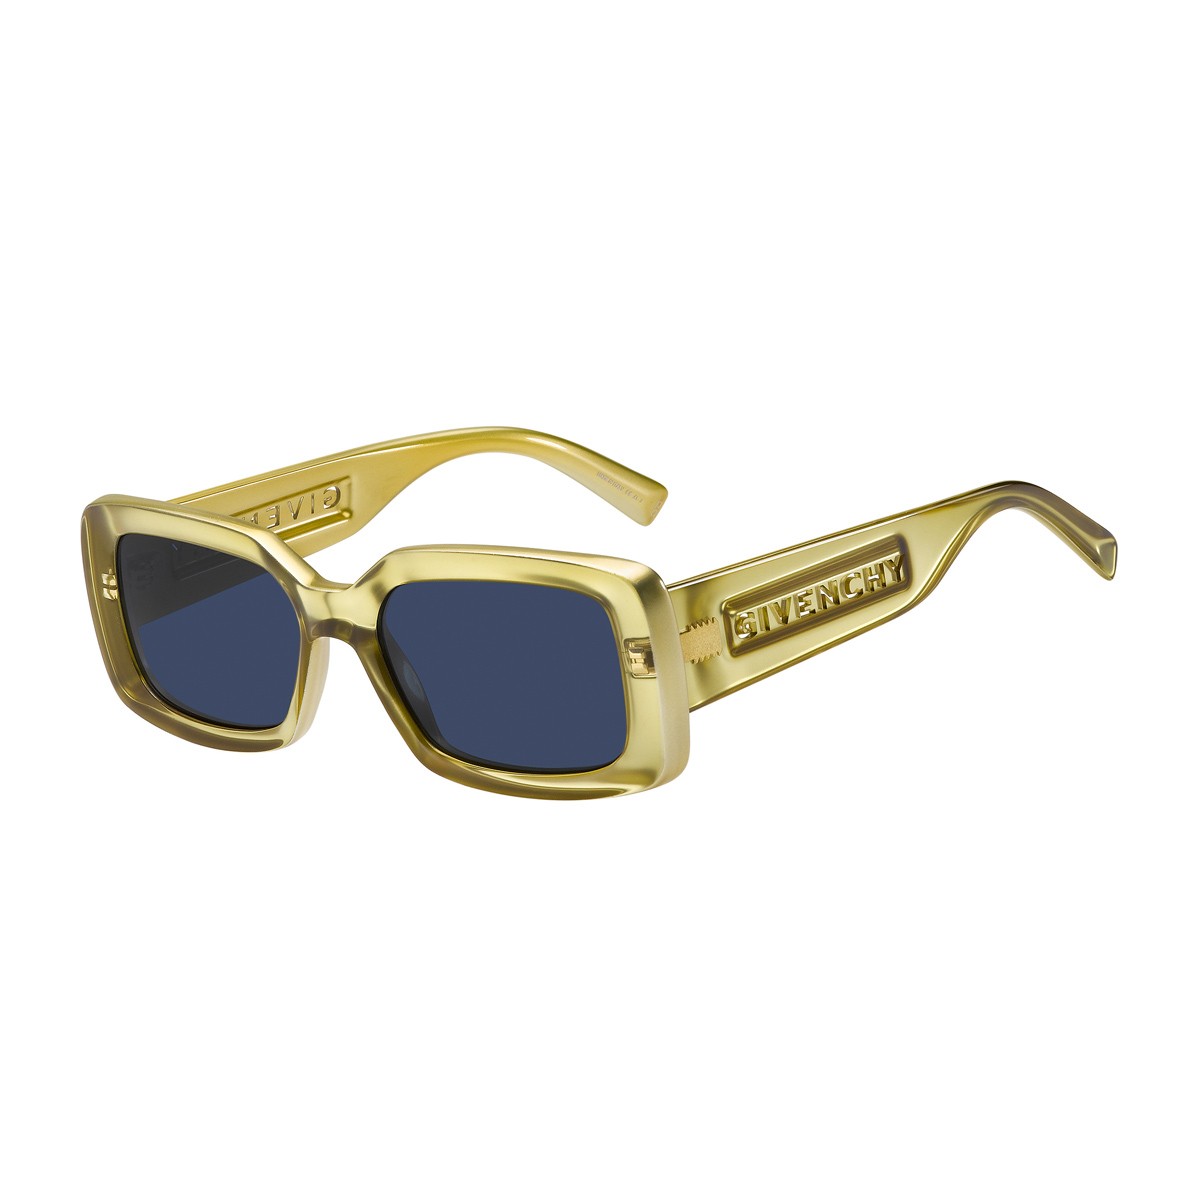 Givenchy Gv 7201/s | Women's sunglasses